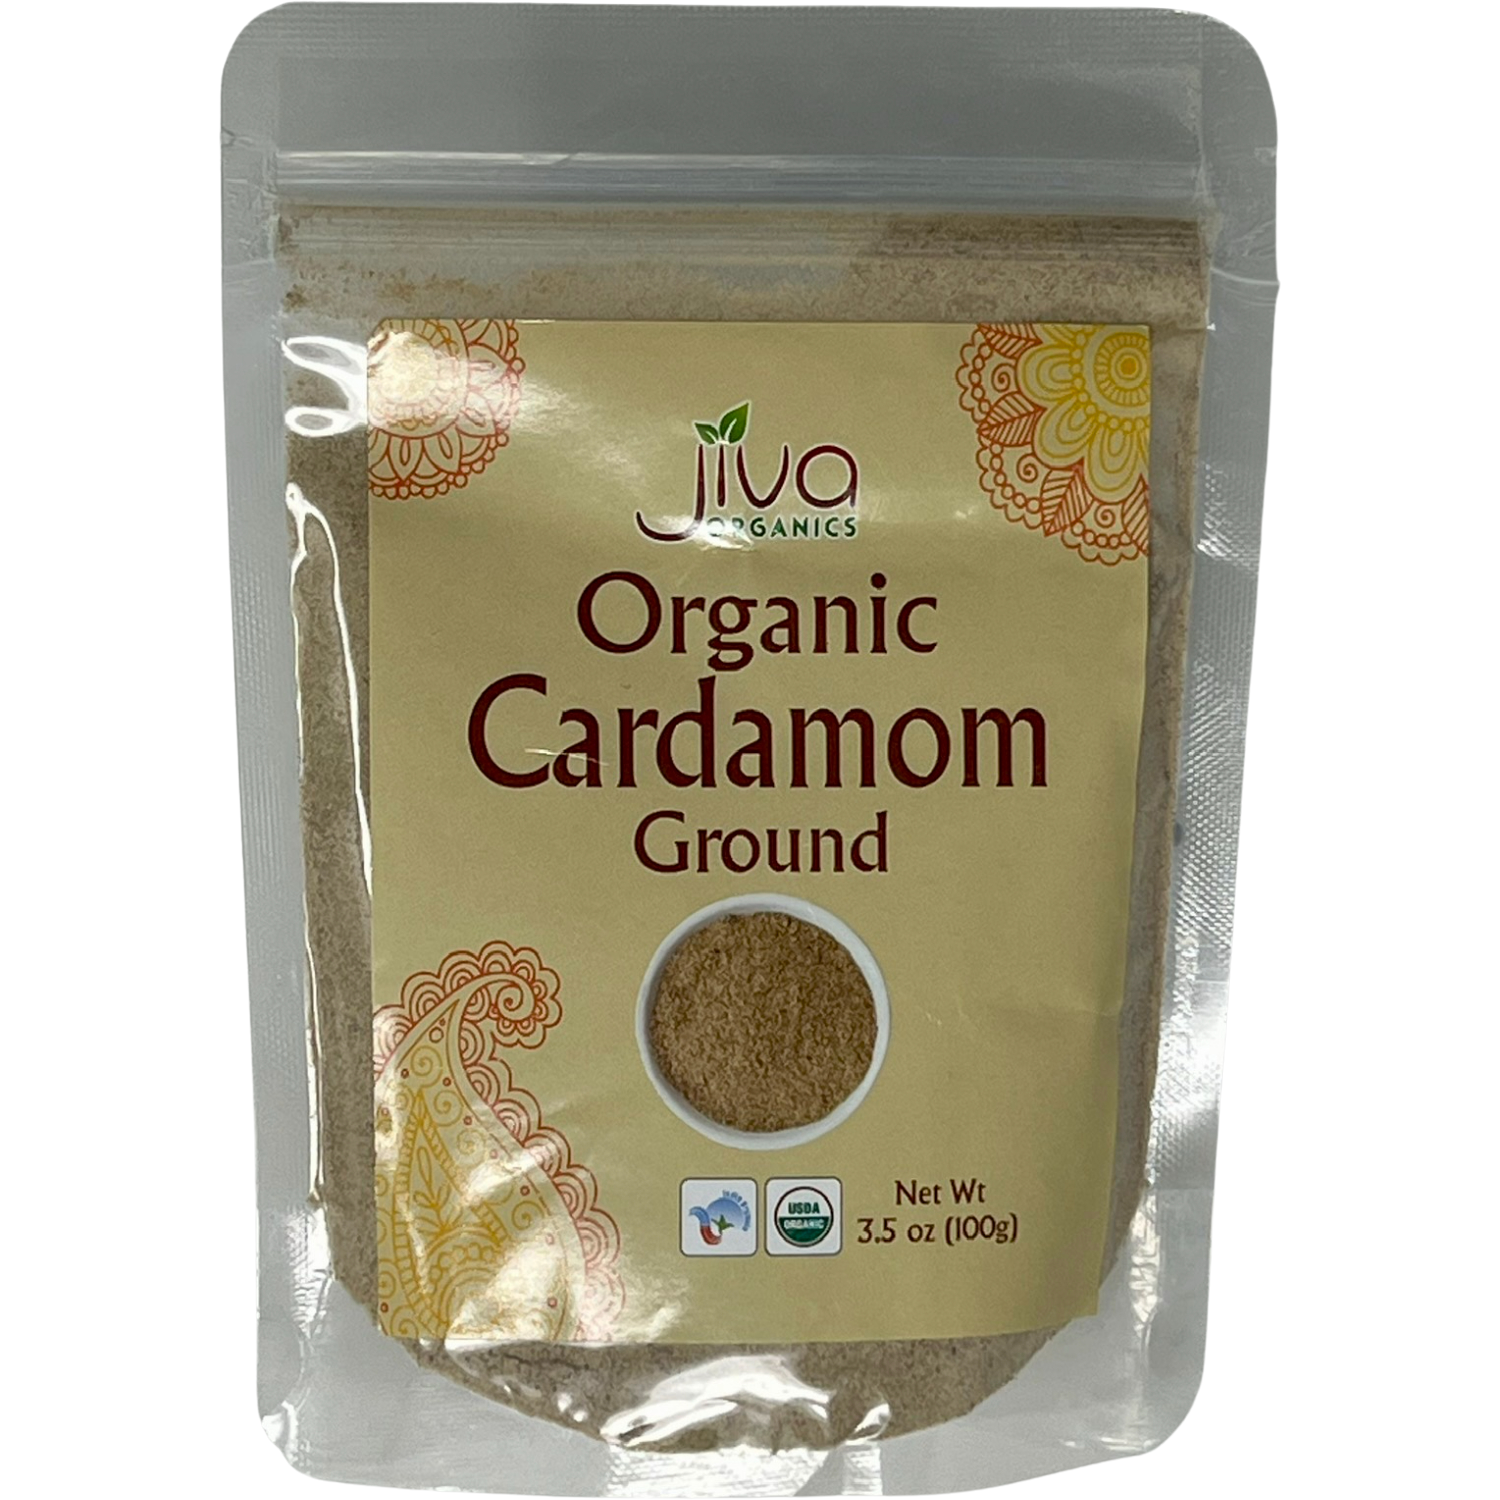 Case of 24 - Jiva Organics Organic Cardamom Ground - 100 Gm (3.5 Oz)